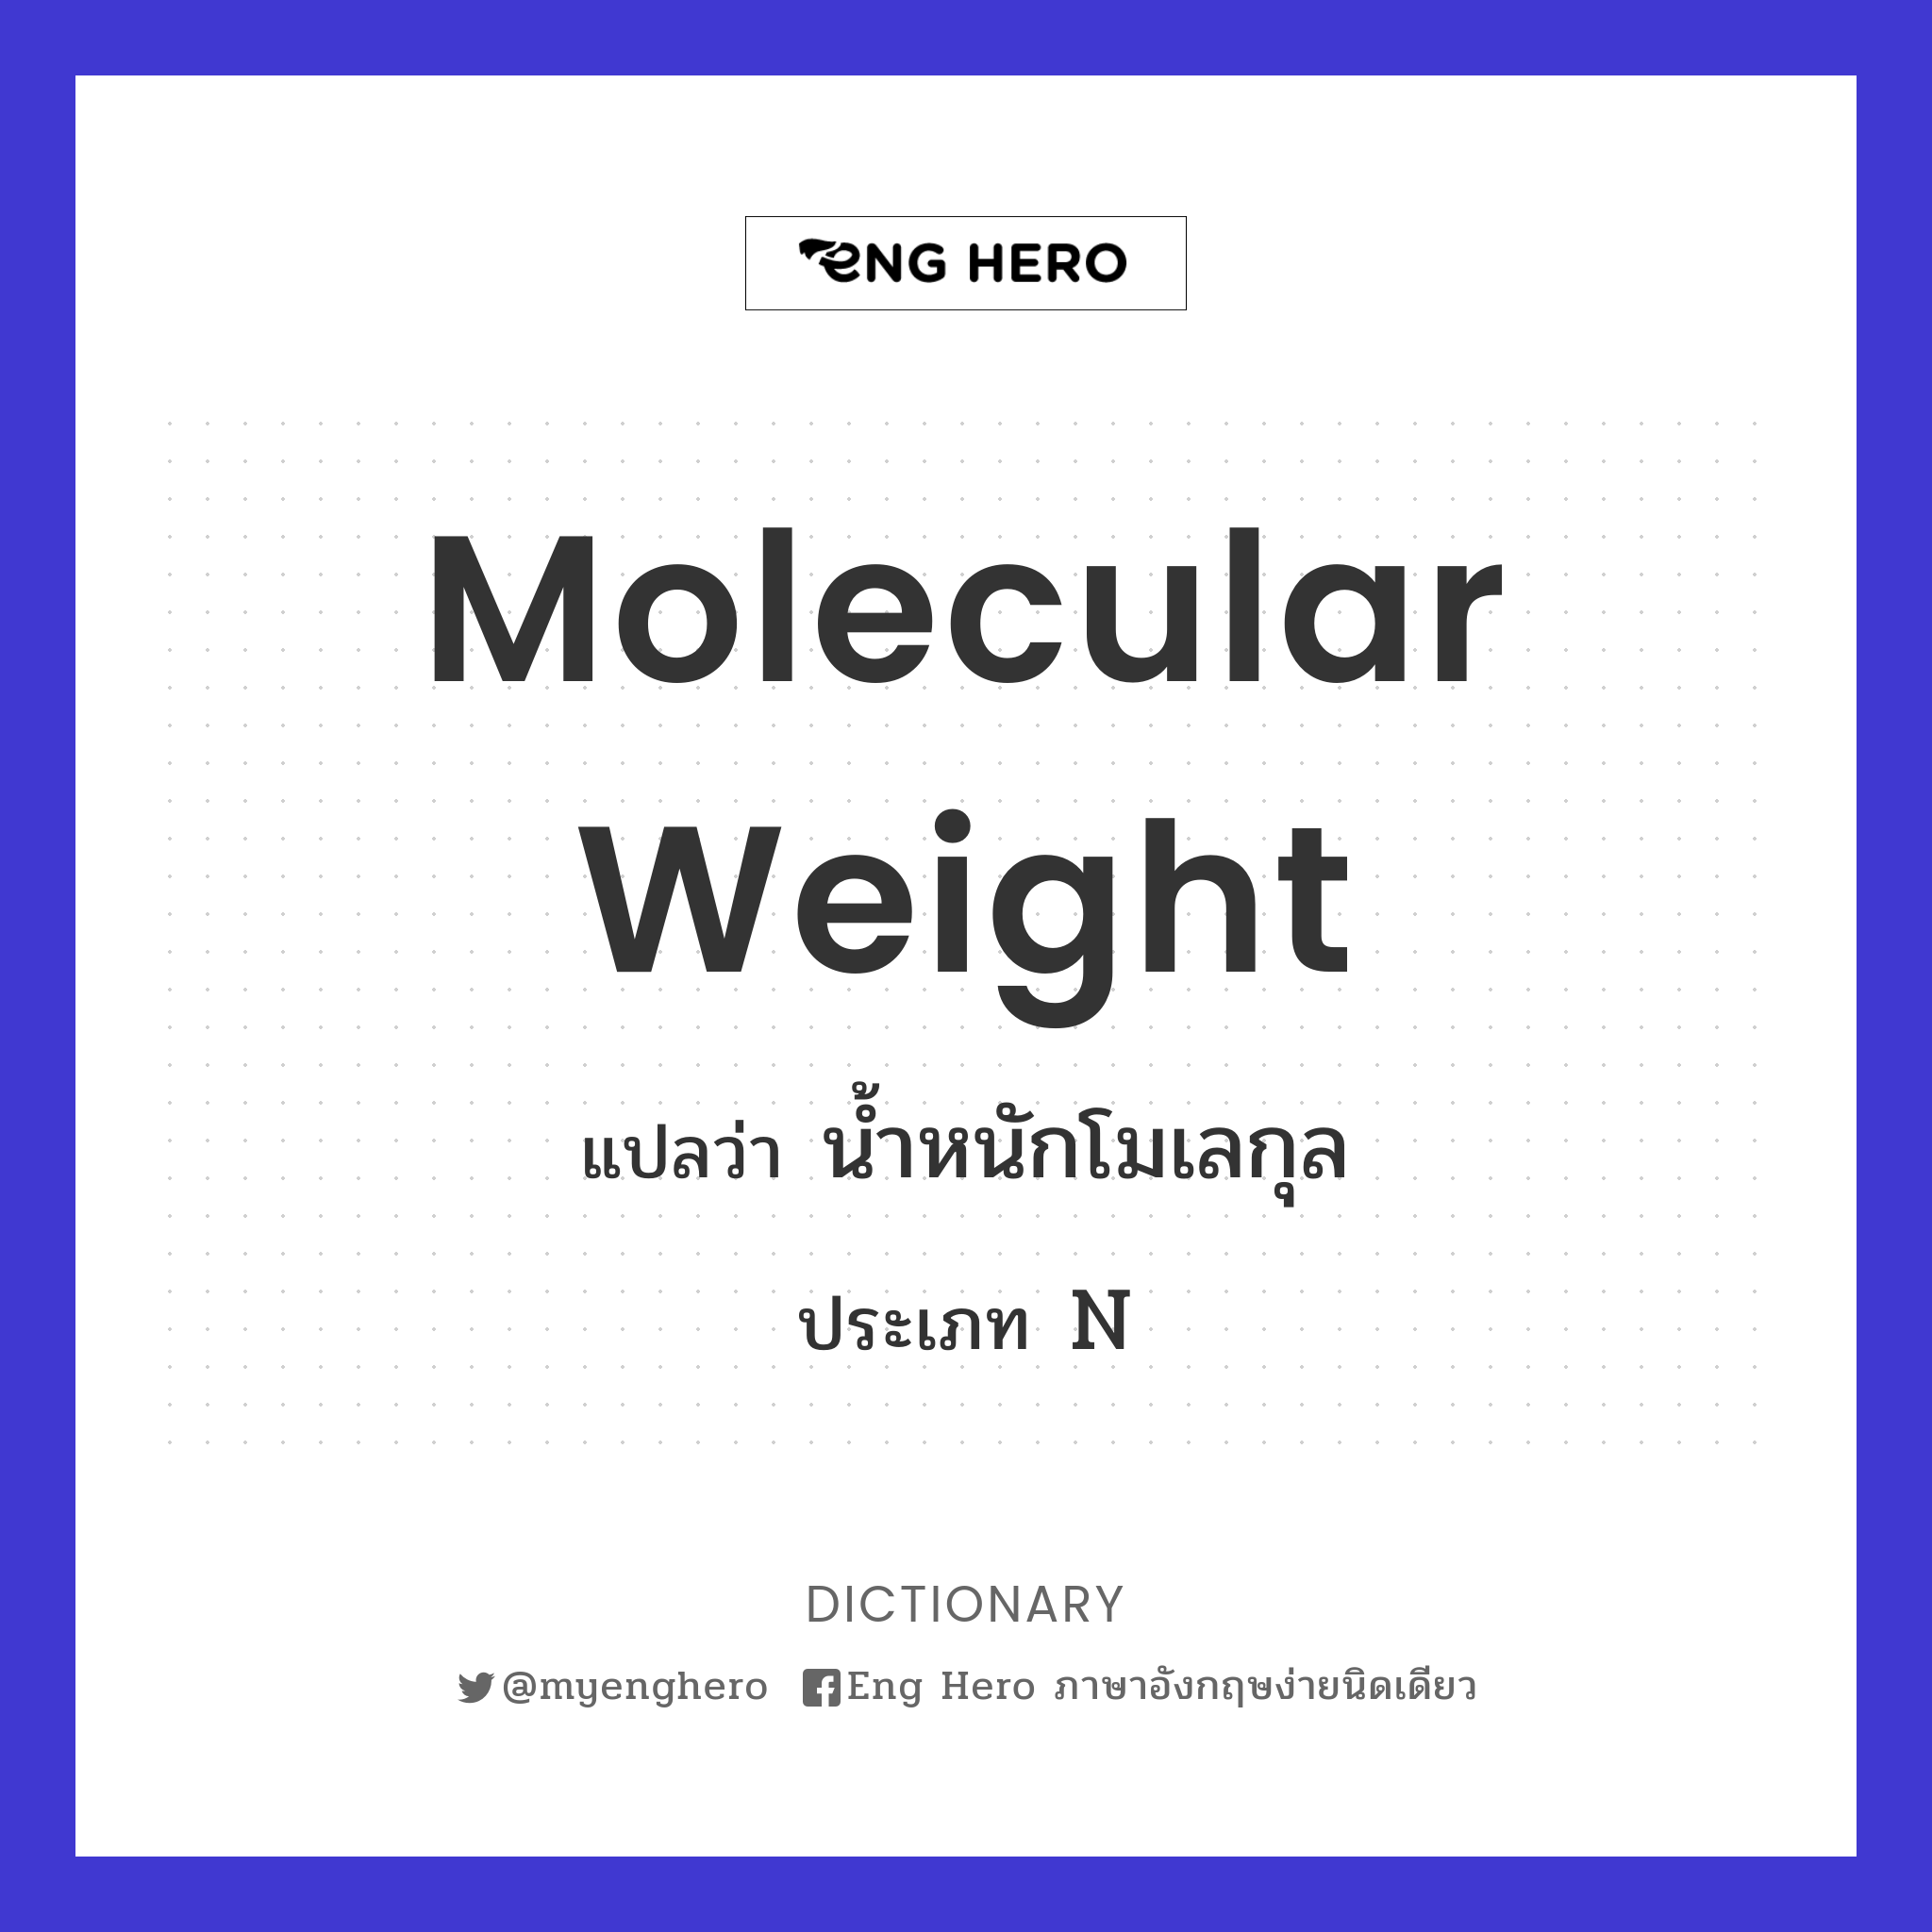 molecular weight